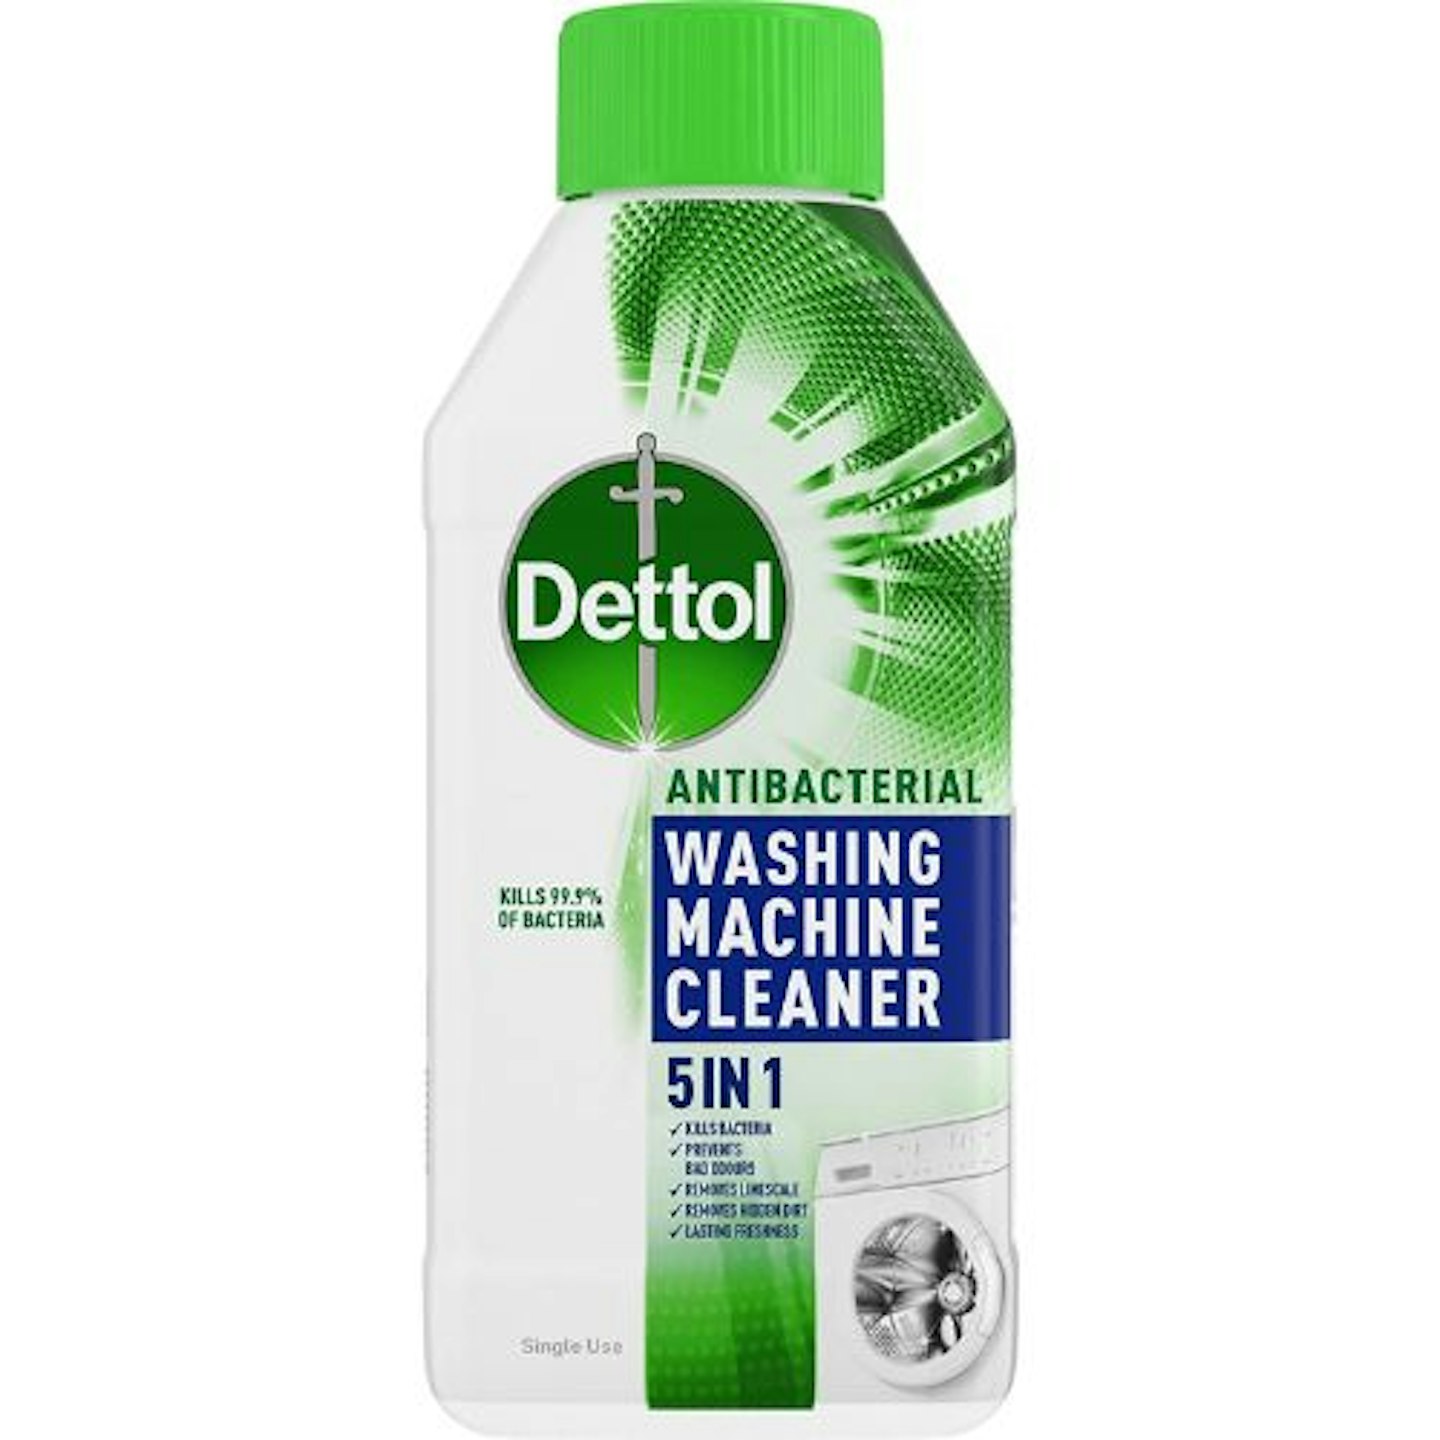 Dettol Original Antibacterial Washing Machine Cleaner